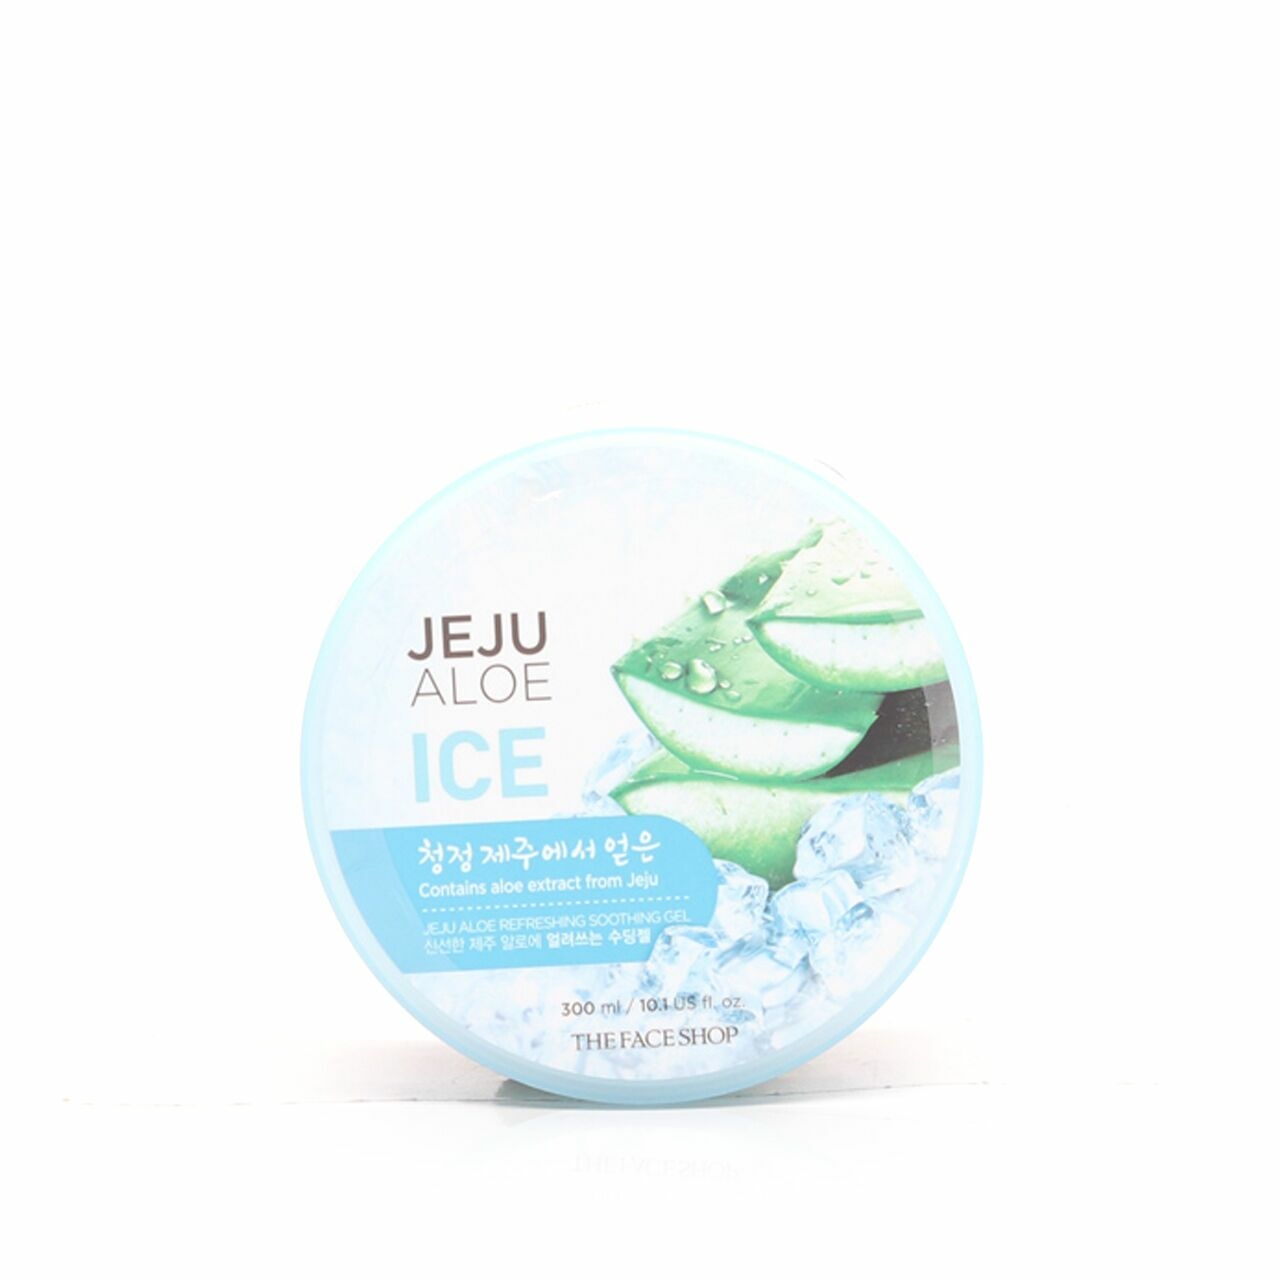 The Face Shop Jeju Aloe Ice Skin Care